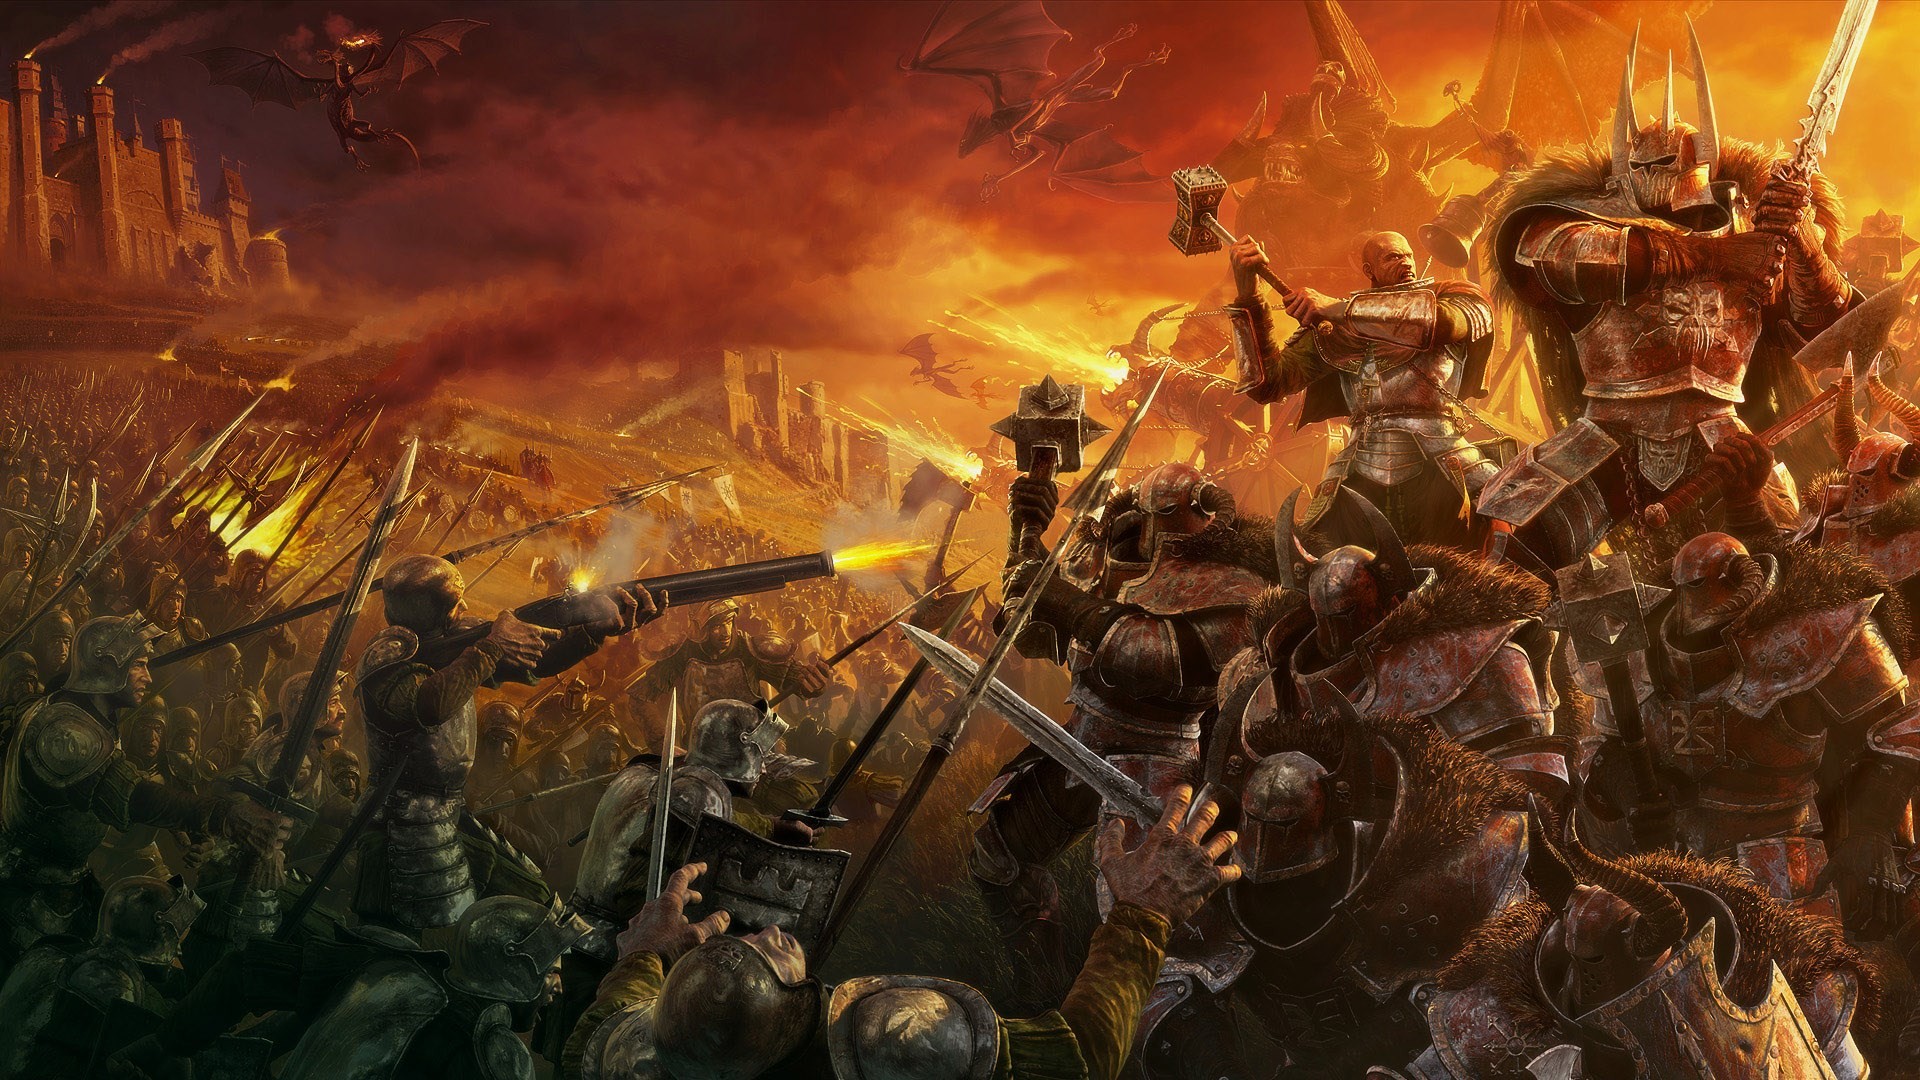 warhammer 40k wallpaper 1920x1080,action adventure game,strategy video game,pc game,battle,cg artwork